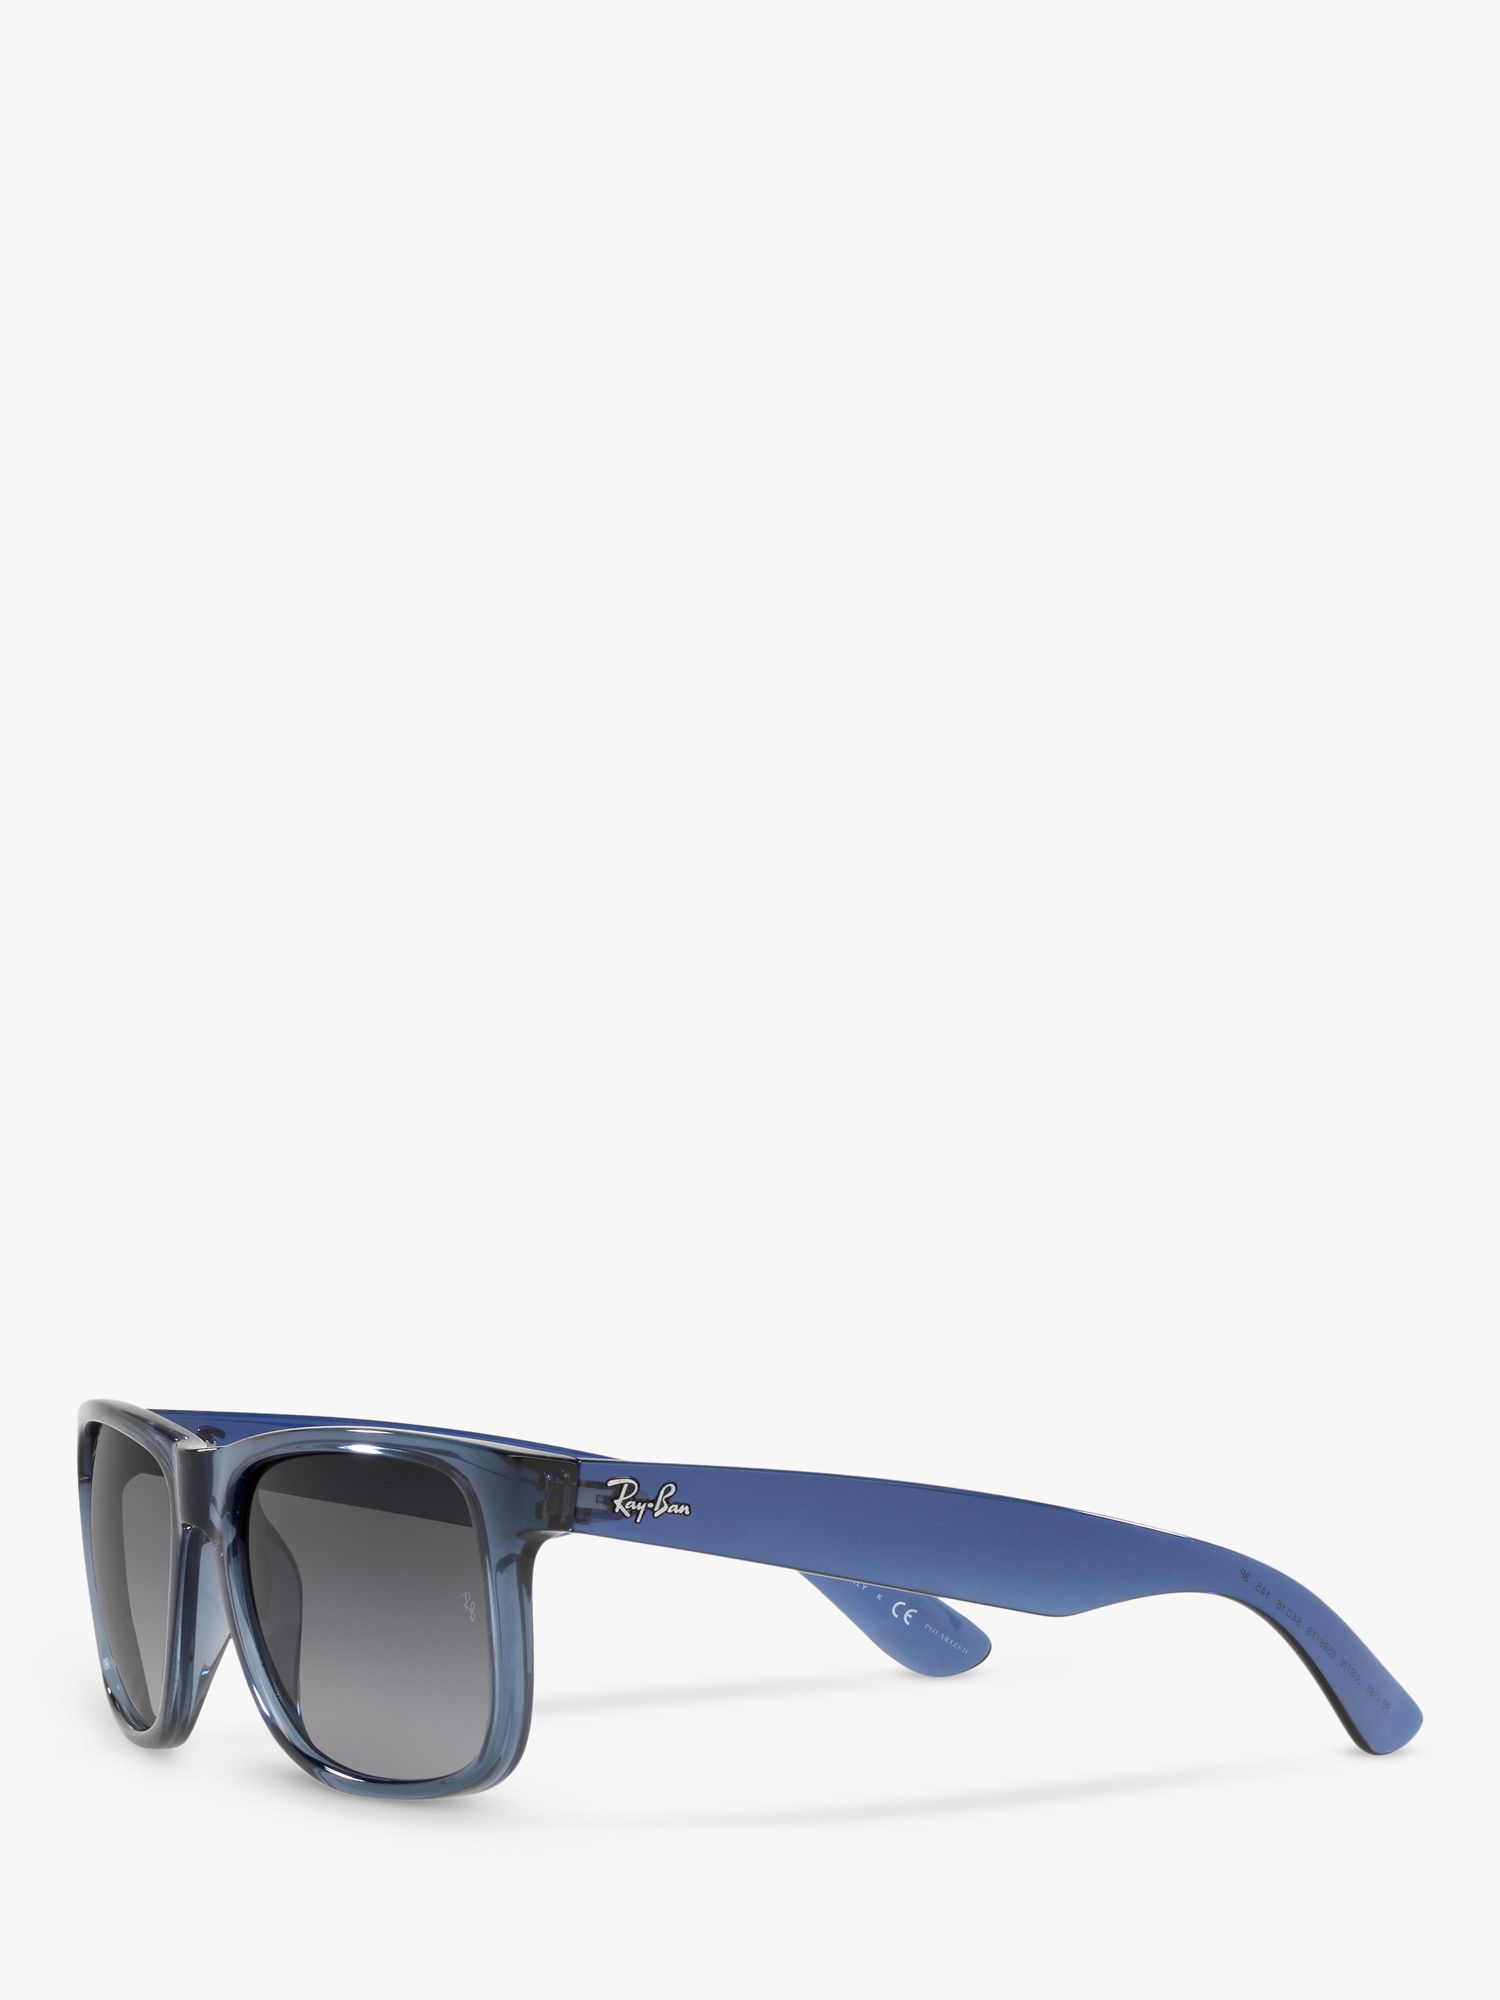 Ray-Ban RB4165 Men's Polarised Justin Square Sunglasses, Transparent Blue/Grey  Gradient at John Lewis & Partners